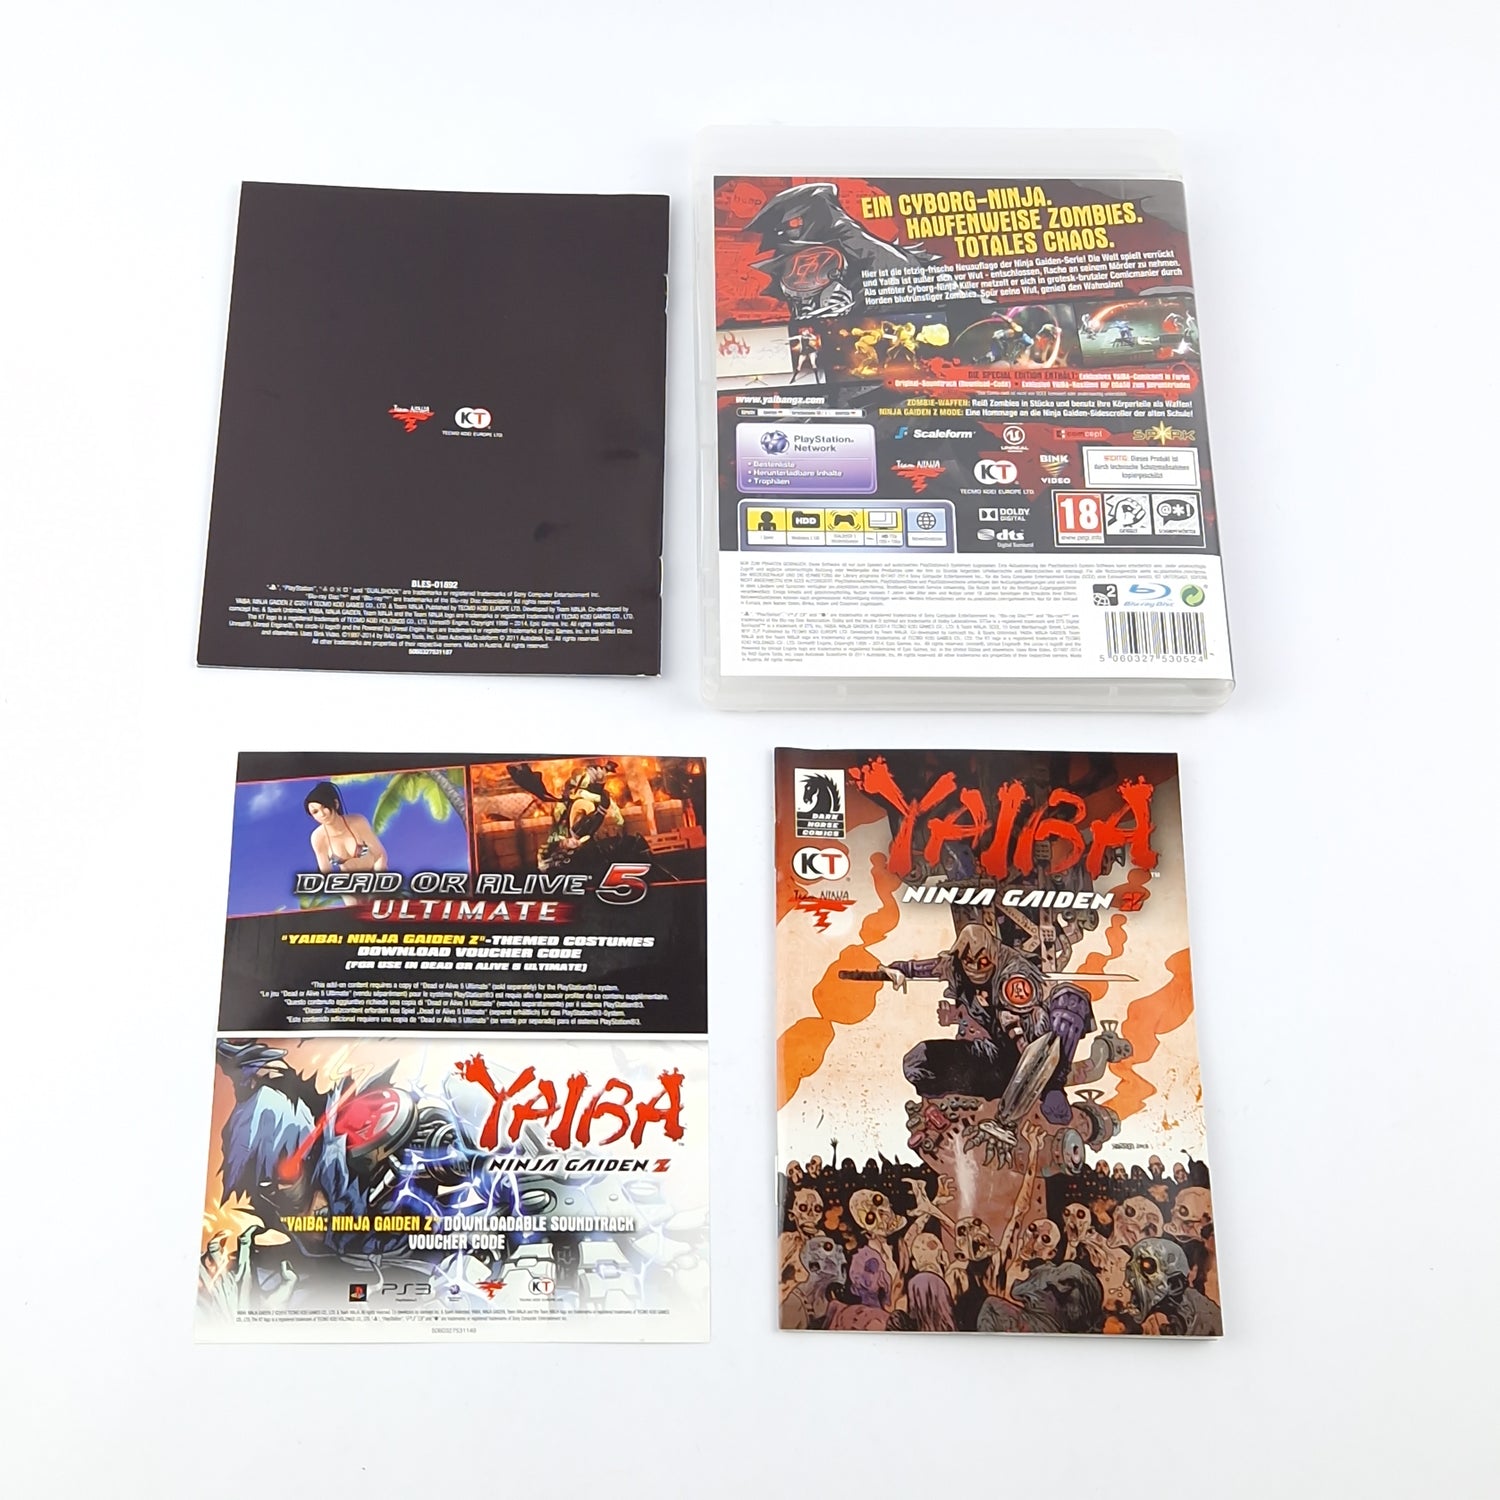 Playstation 3 game: Yaiba Ninja Gaiden Z - OVP instructions CD - SONY PS3 USK18